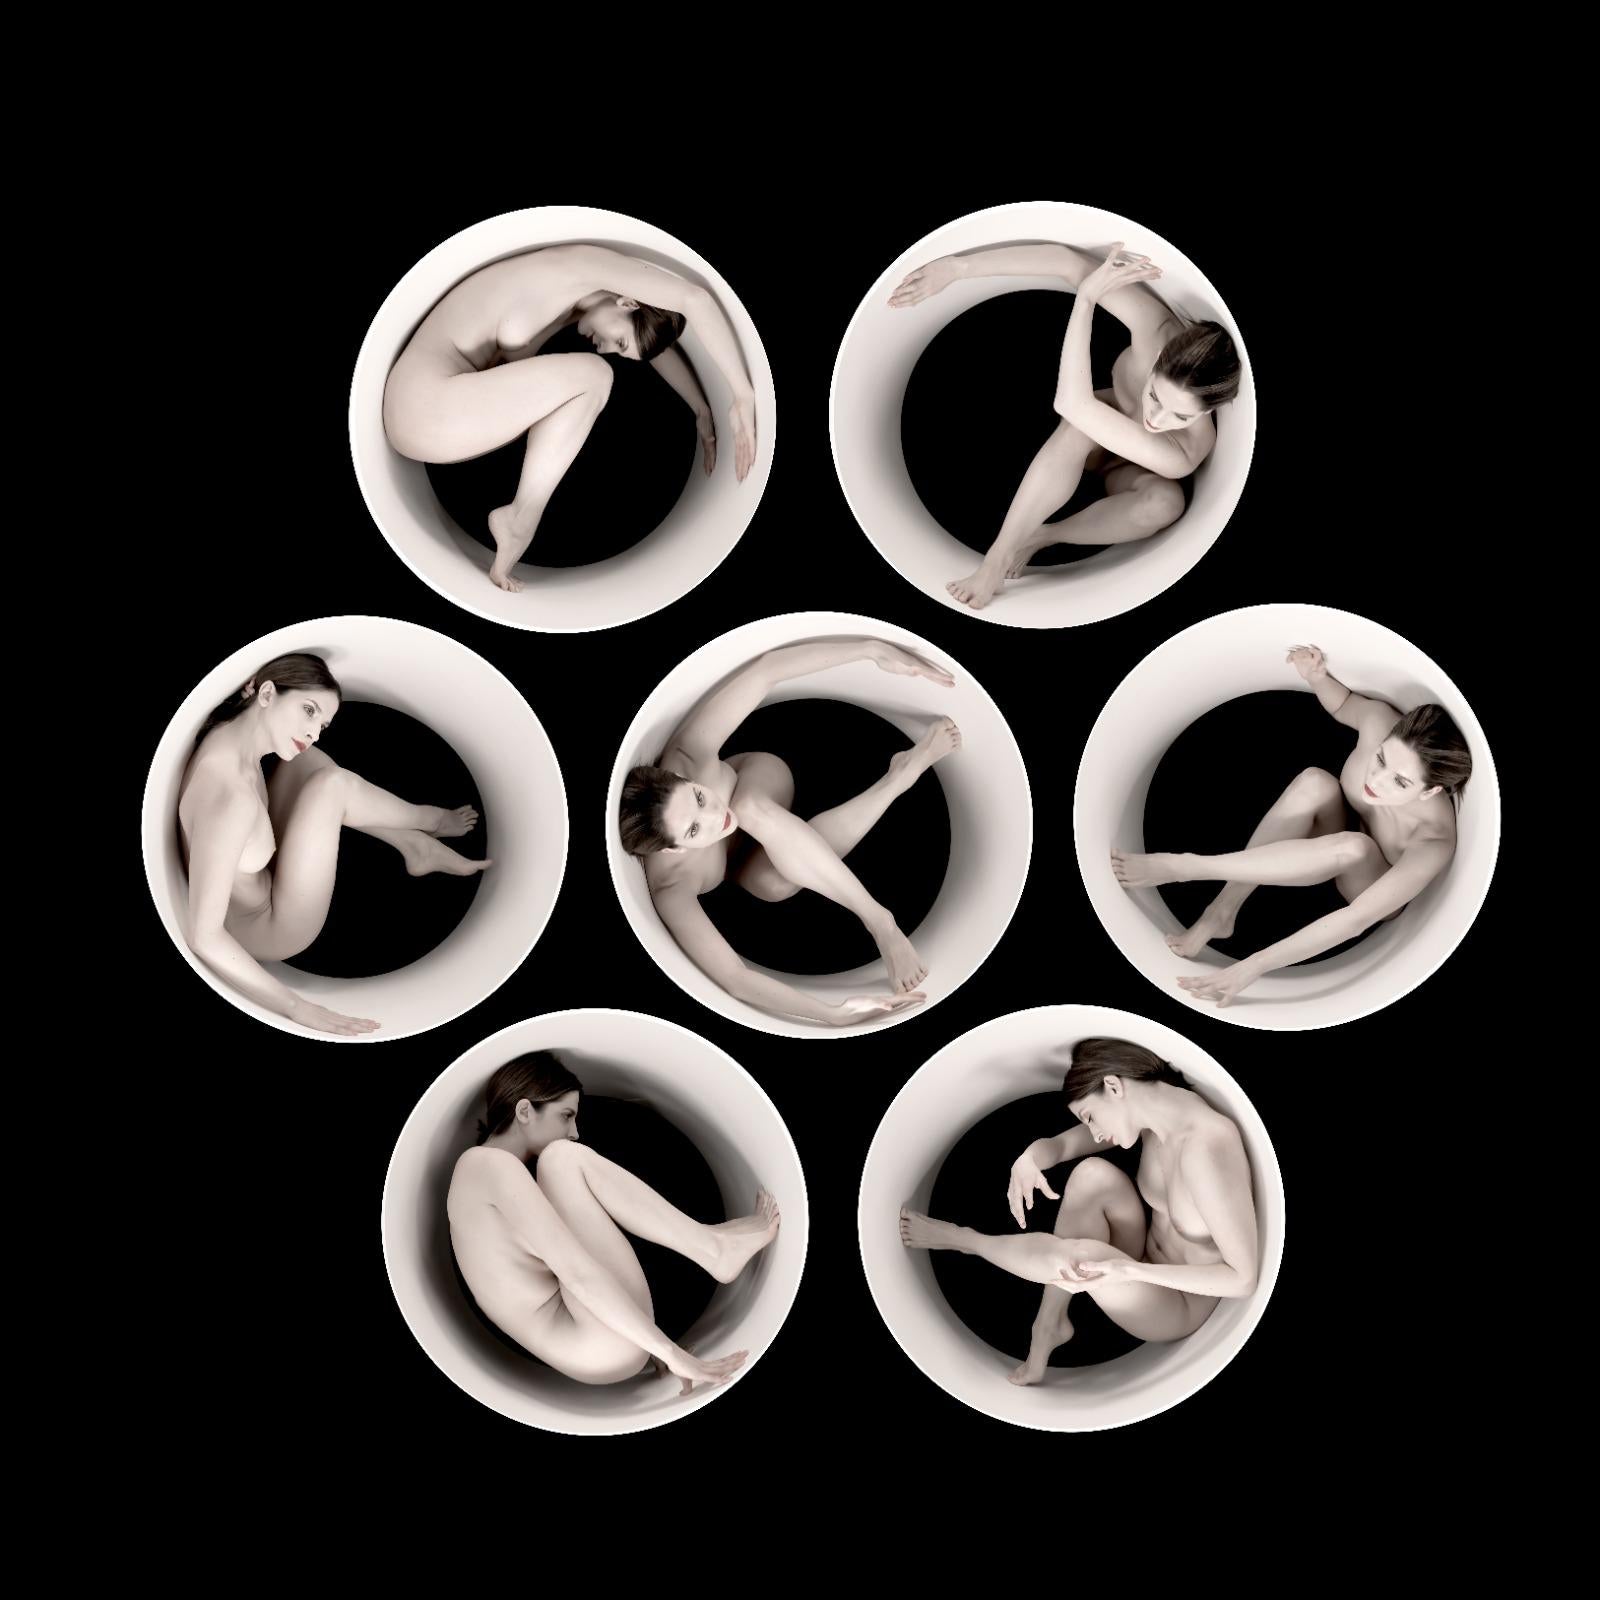 Jeff Robb Figurative Photograph - "Cir2" 3-D Lenticular Black & White figurative nude photo framed, contemporary